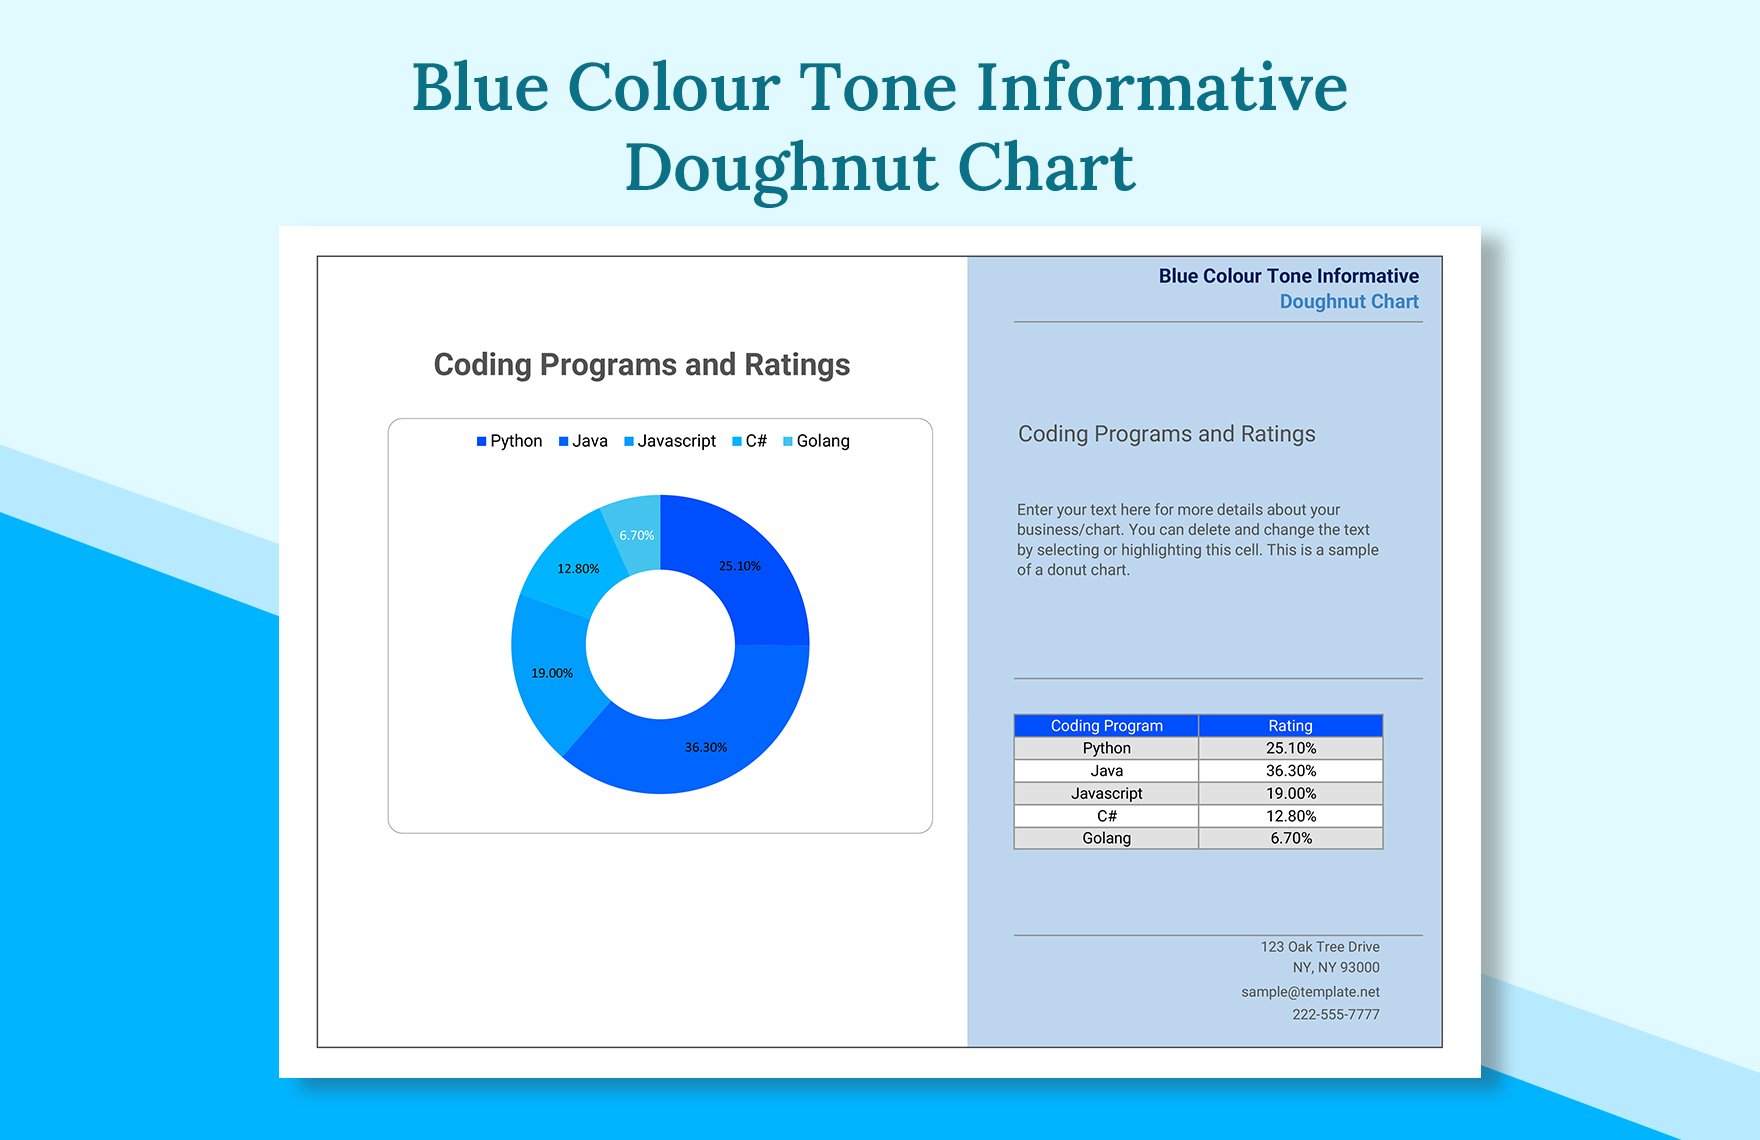 Blue Colour Tone Informative Doughnut Chart